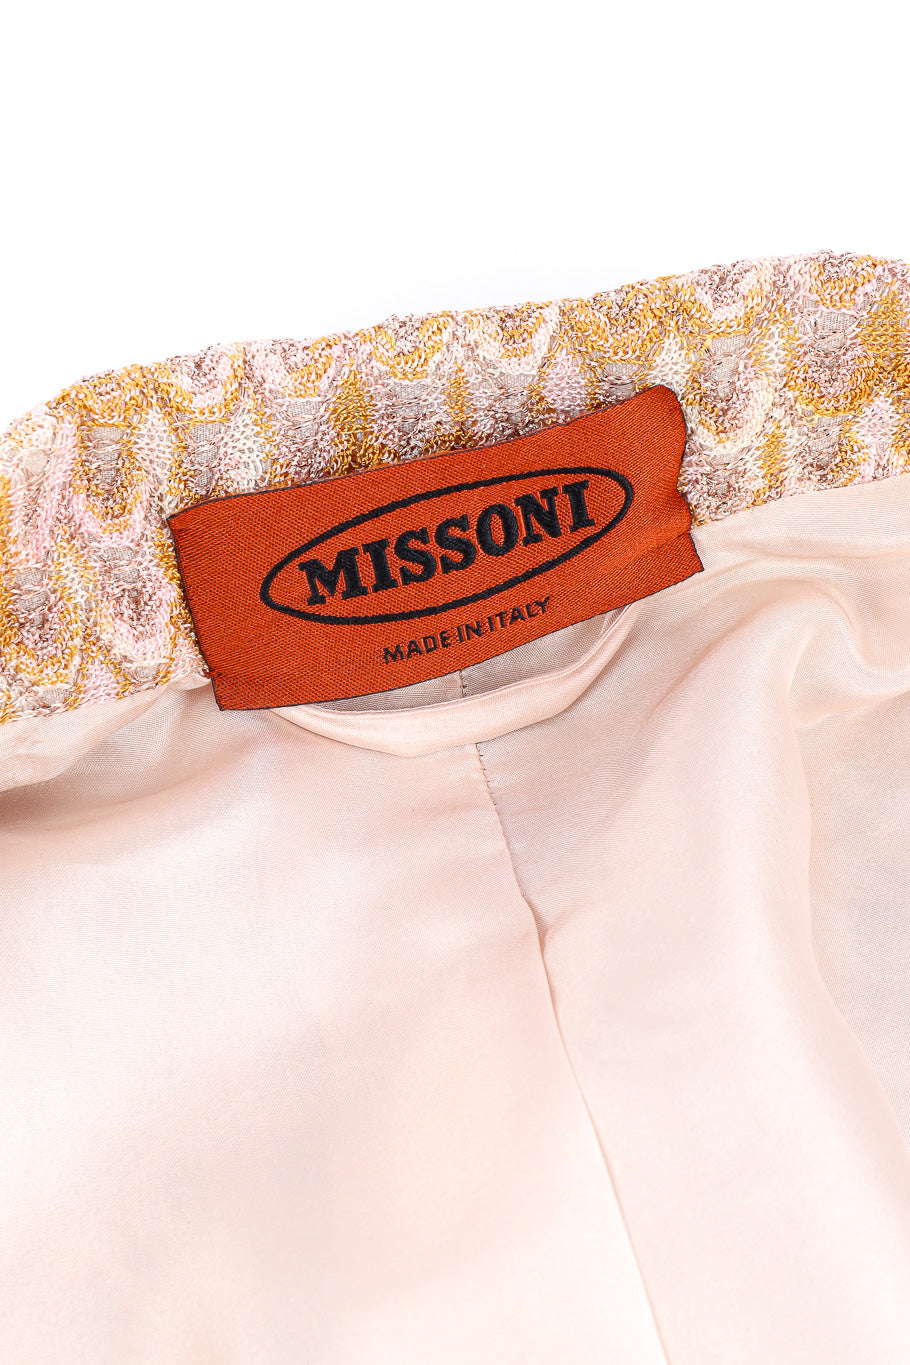 Missoni scallop knit coat designer tag @recessla